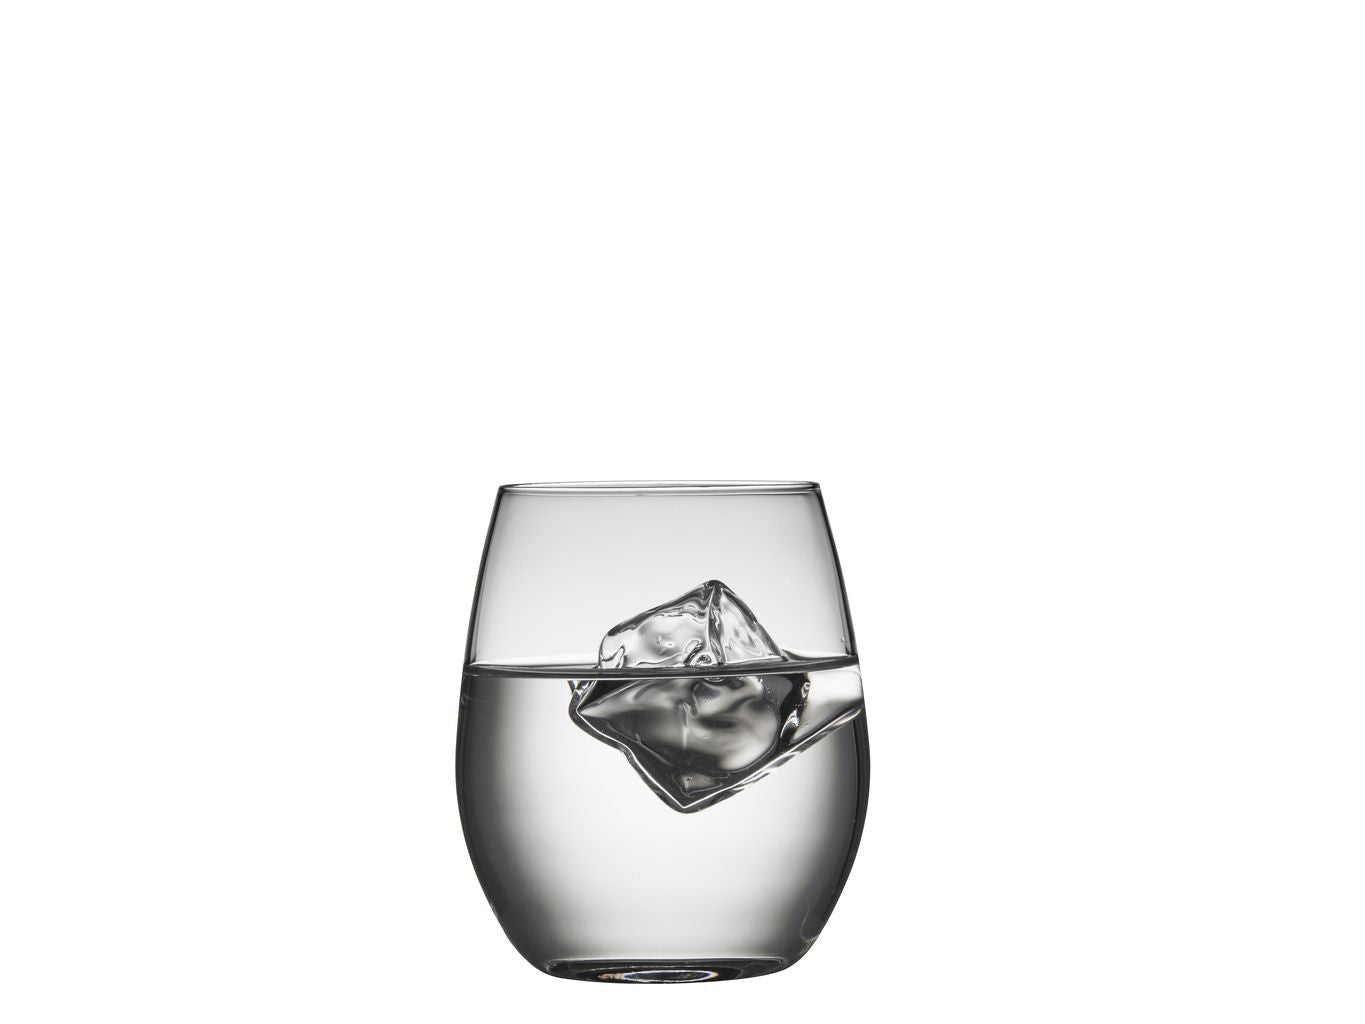 Lyngby Glasjuvel vattenglas 39 Cl, 6 st.